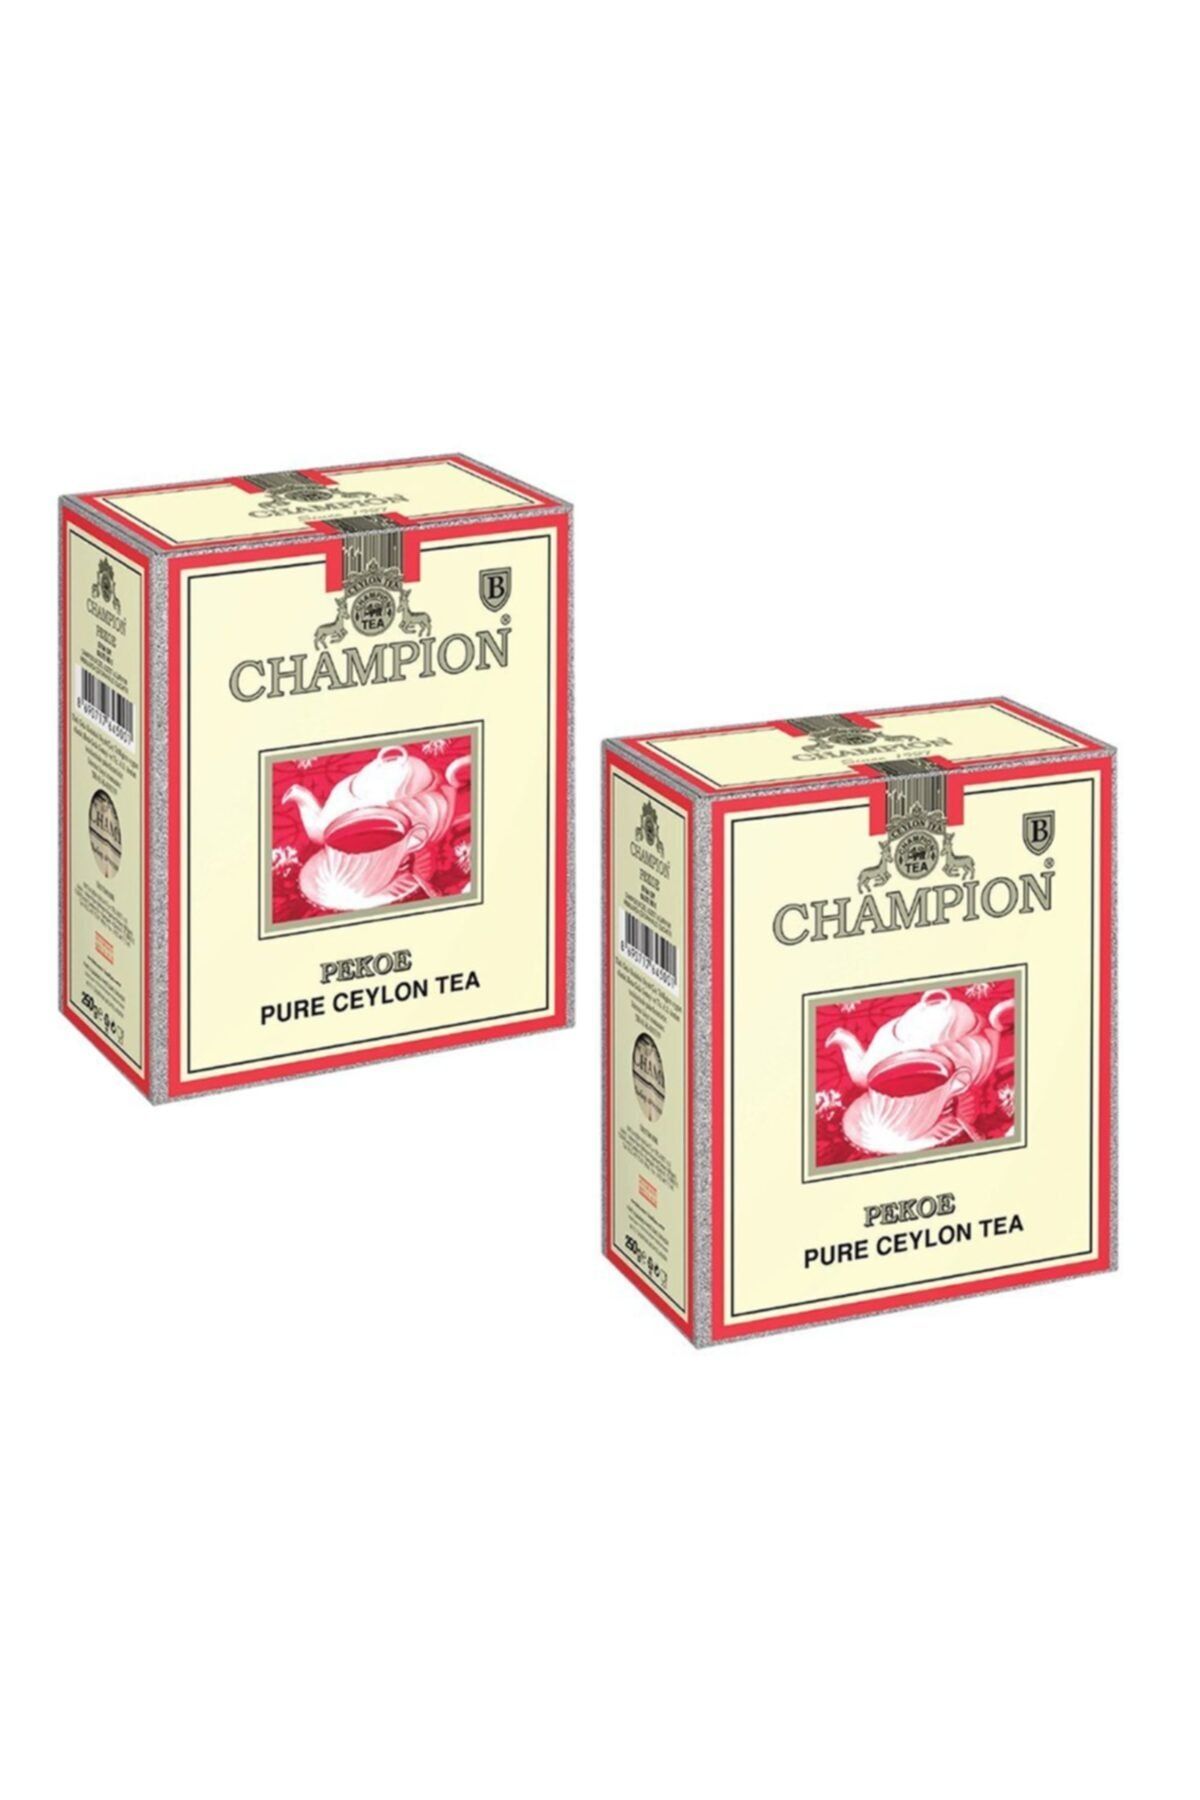 Champion Pekoe 500 gr (SUPER PEKOE) X 2 Adet - Seylan Siyah Çayı